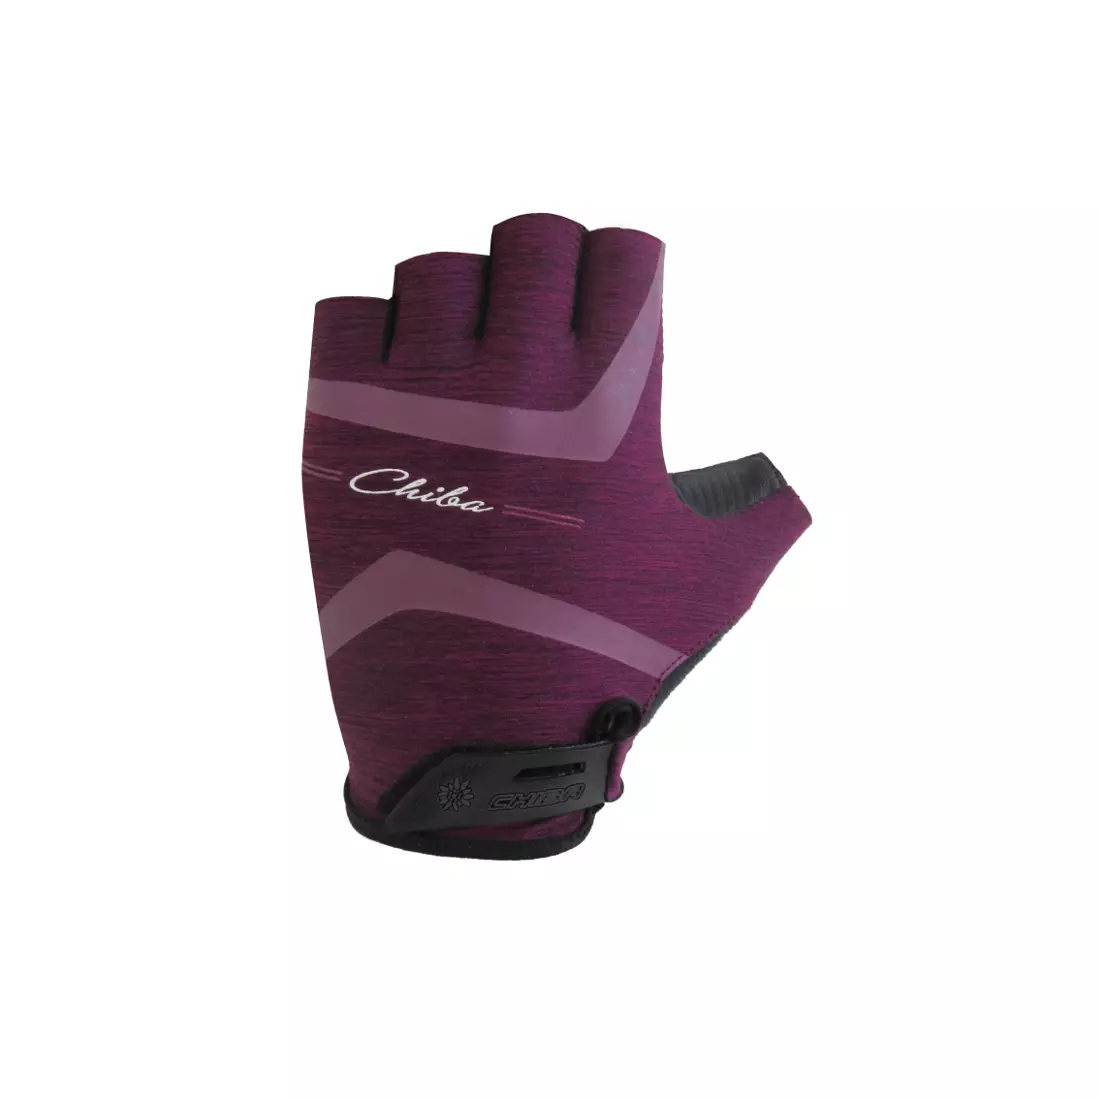 CHIBA LADY SUPER LIGHT women's cycling gloves, purple